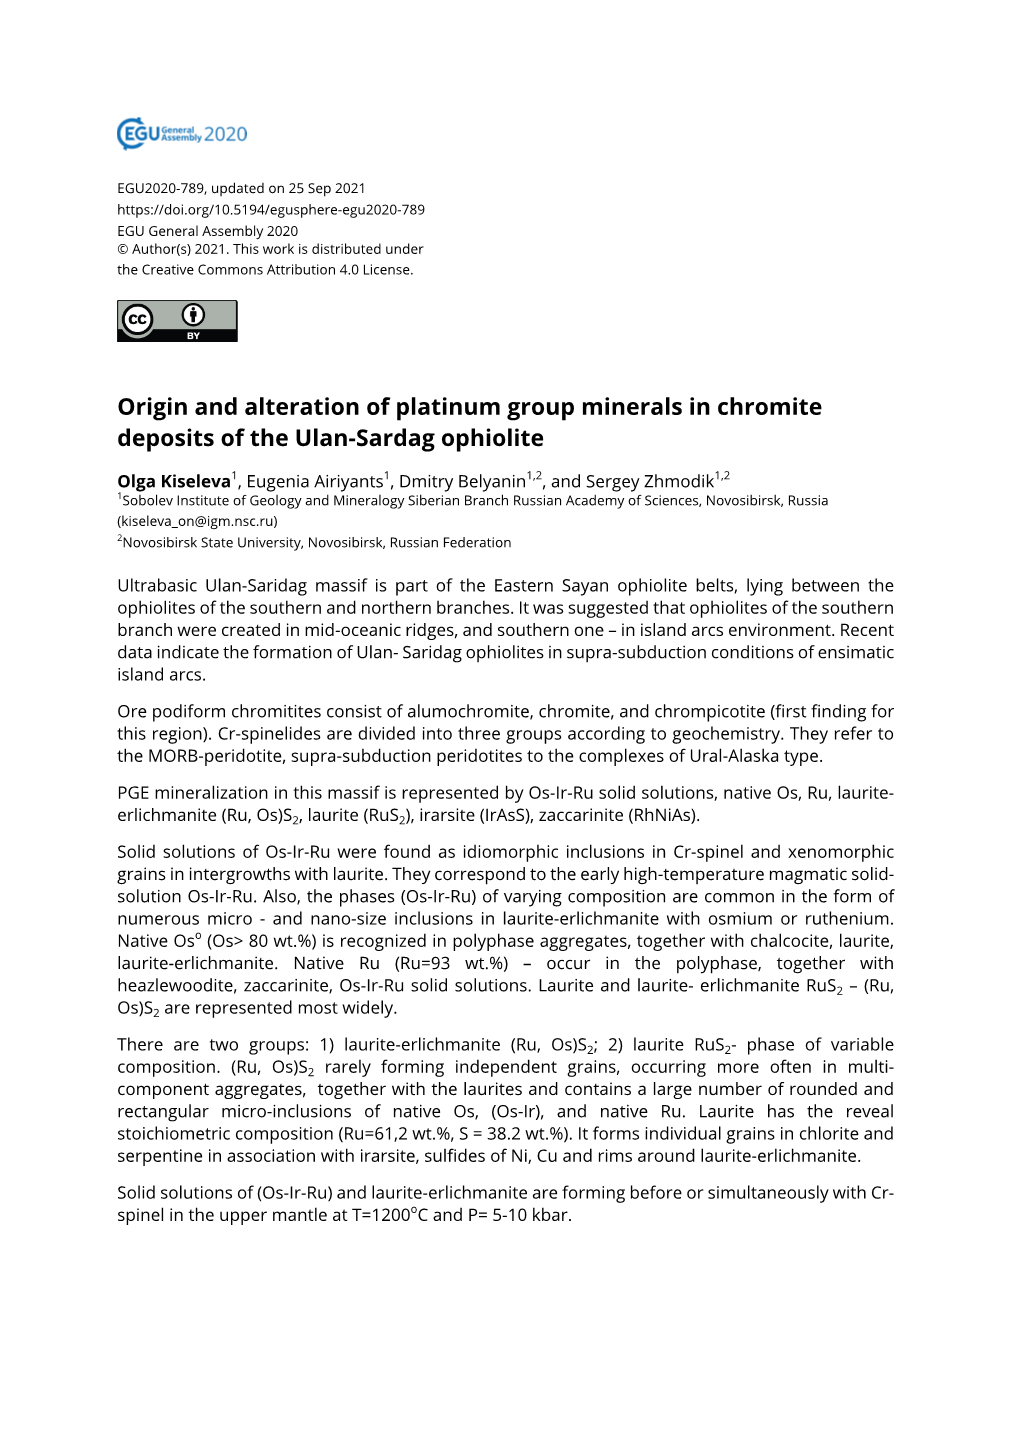 Origin and Alteration of Platinum Group Minerals in Chromite Deposits of the Ulan-Sardag Ophiolite